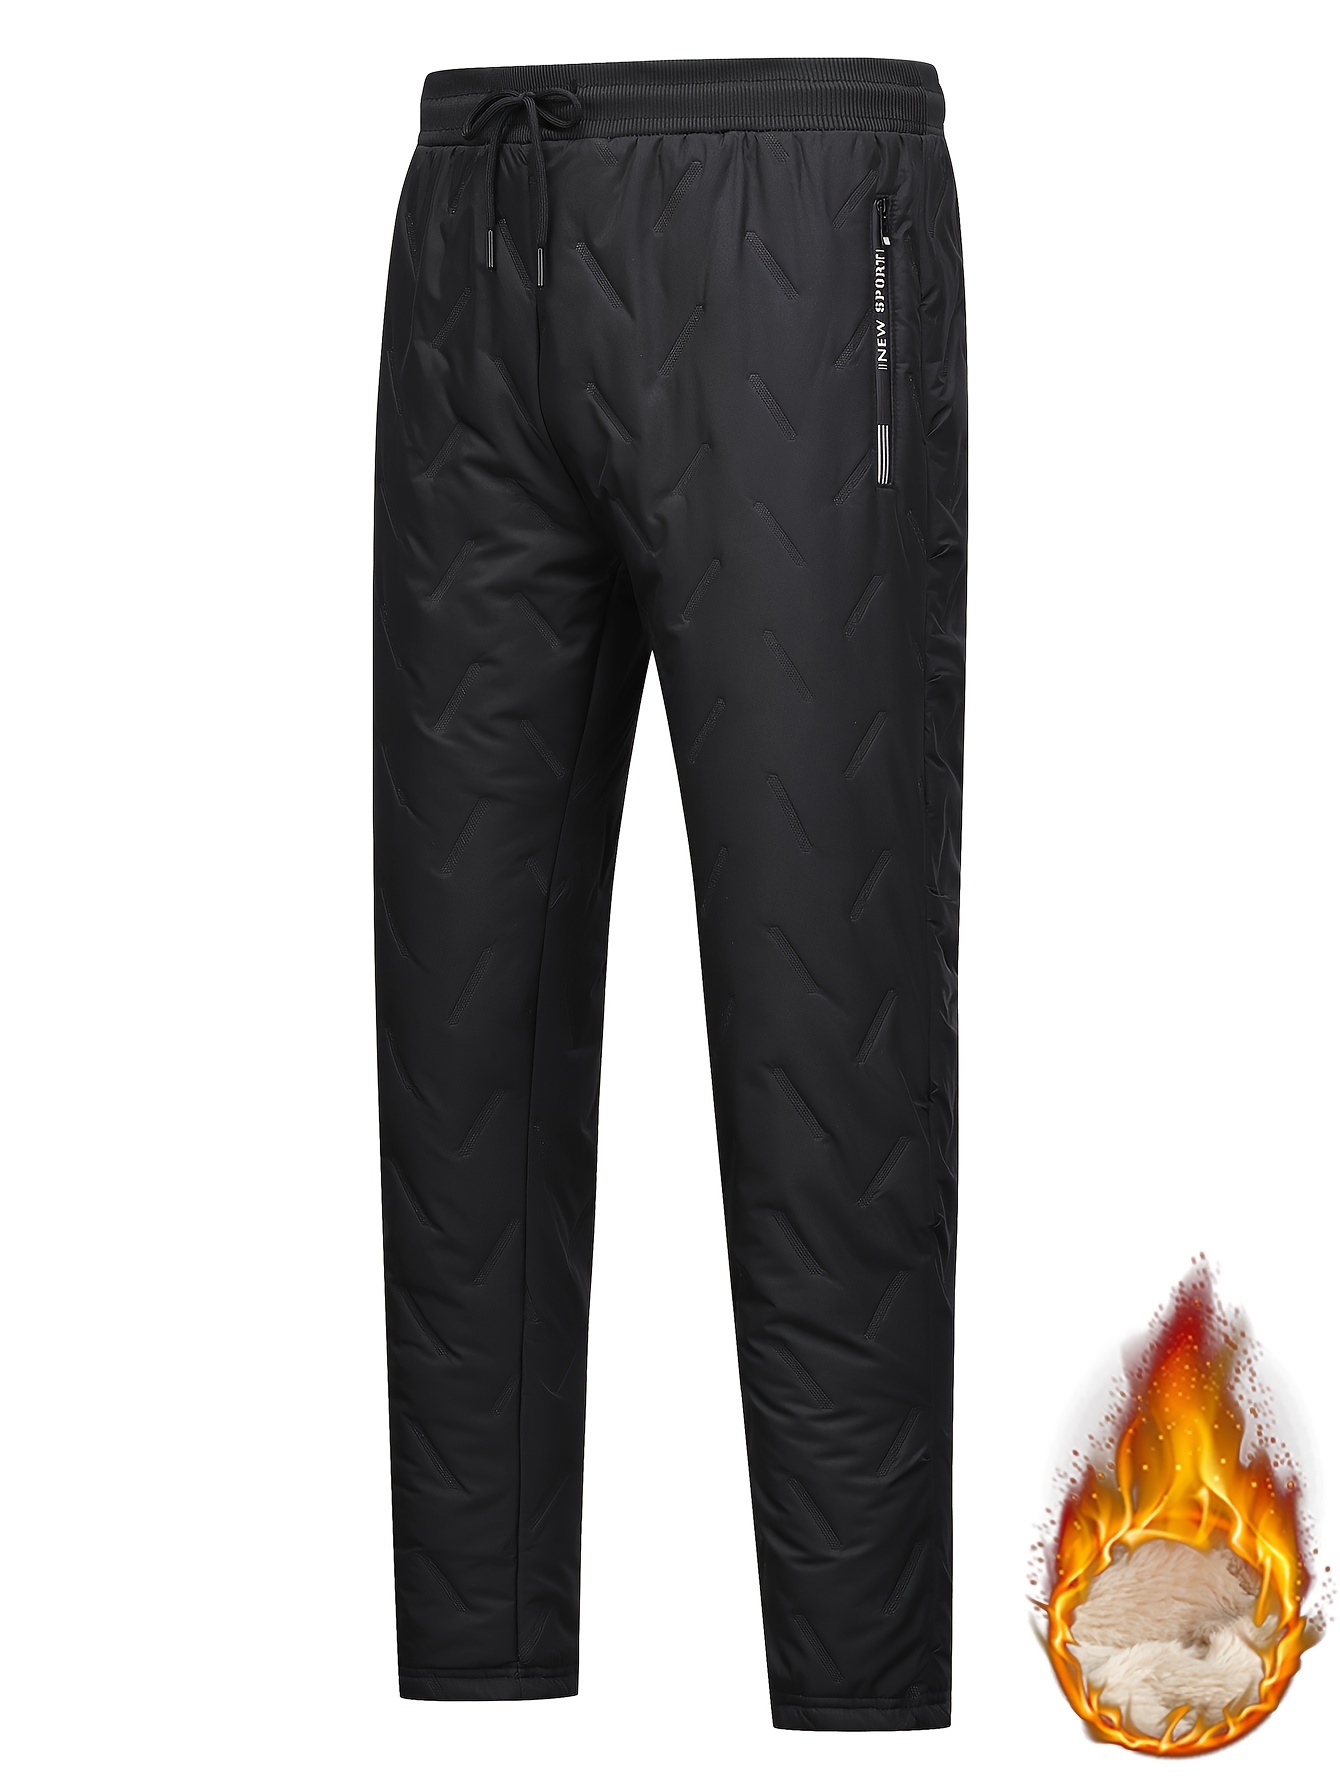 Warm Fleece Quick Drying Windbreaker Pants, Men's Casual Medium Stretch  Sport Pants For Fall Winter Outdoor Hiking Camping